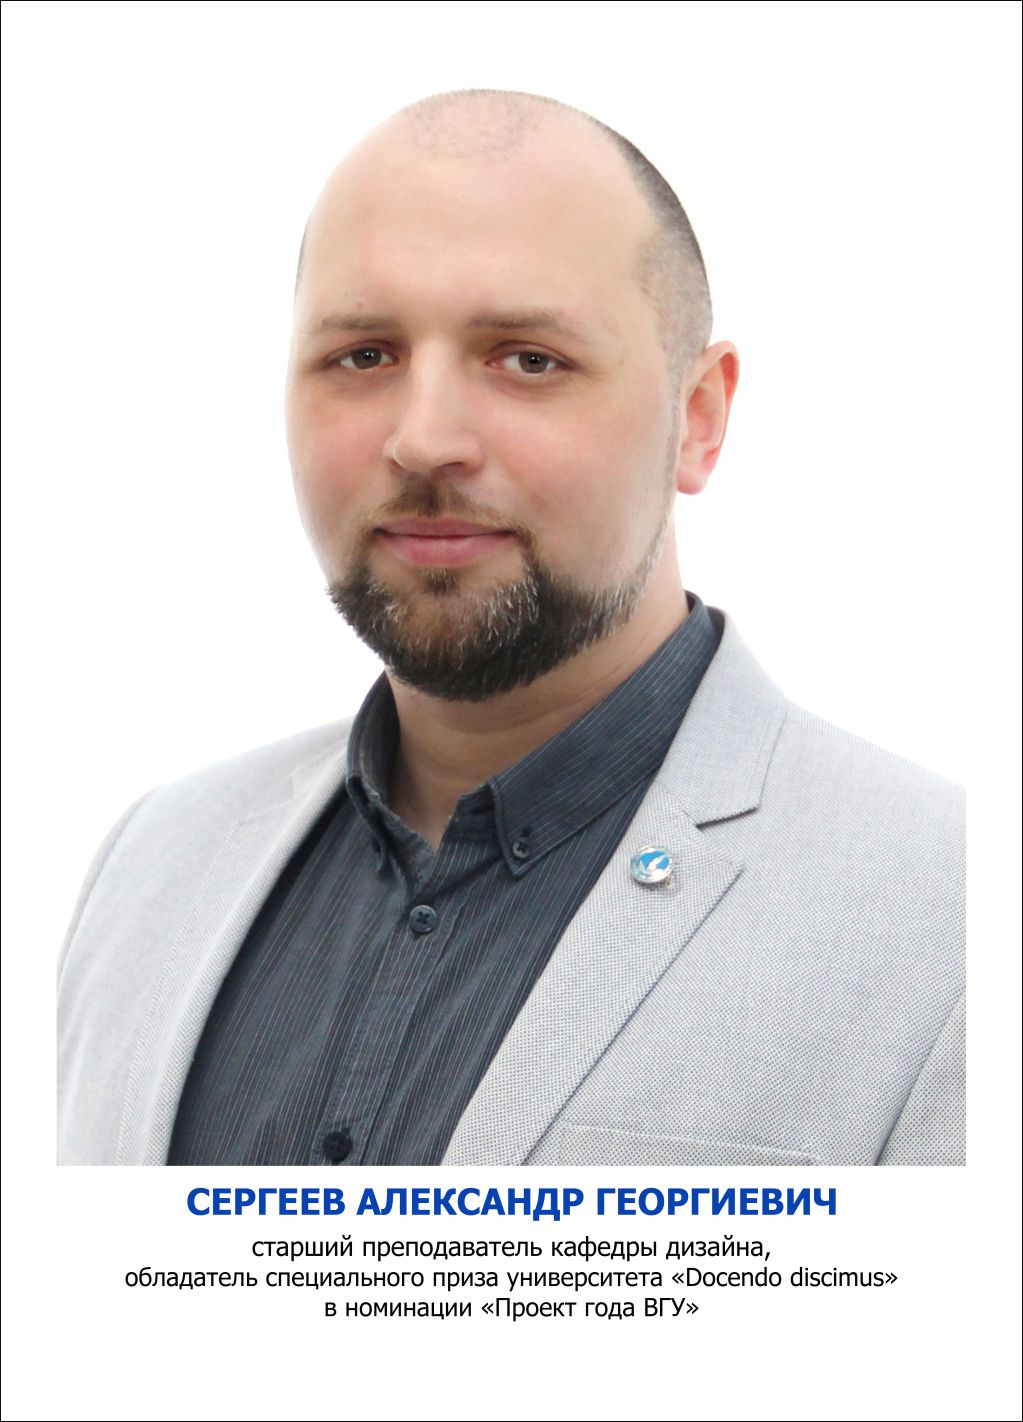 Сергеев Александр Георгиевич